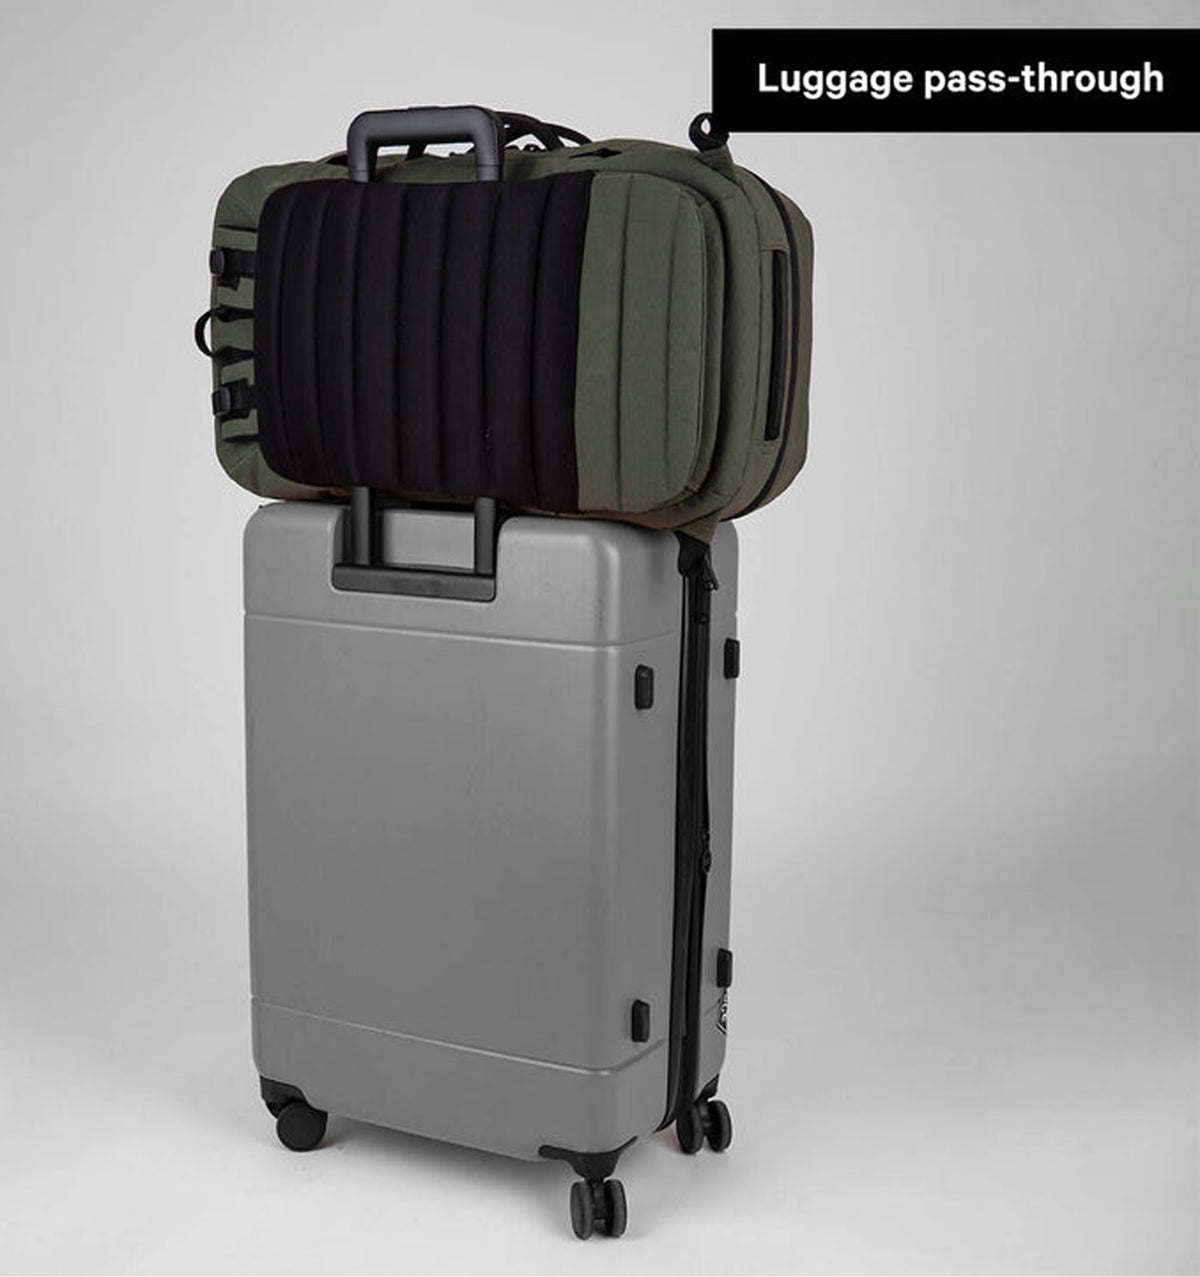 Pakt 16" Travel Backpack V2 45L - Forest